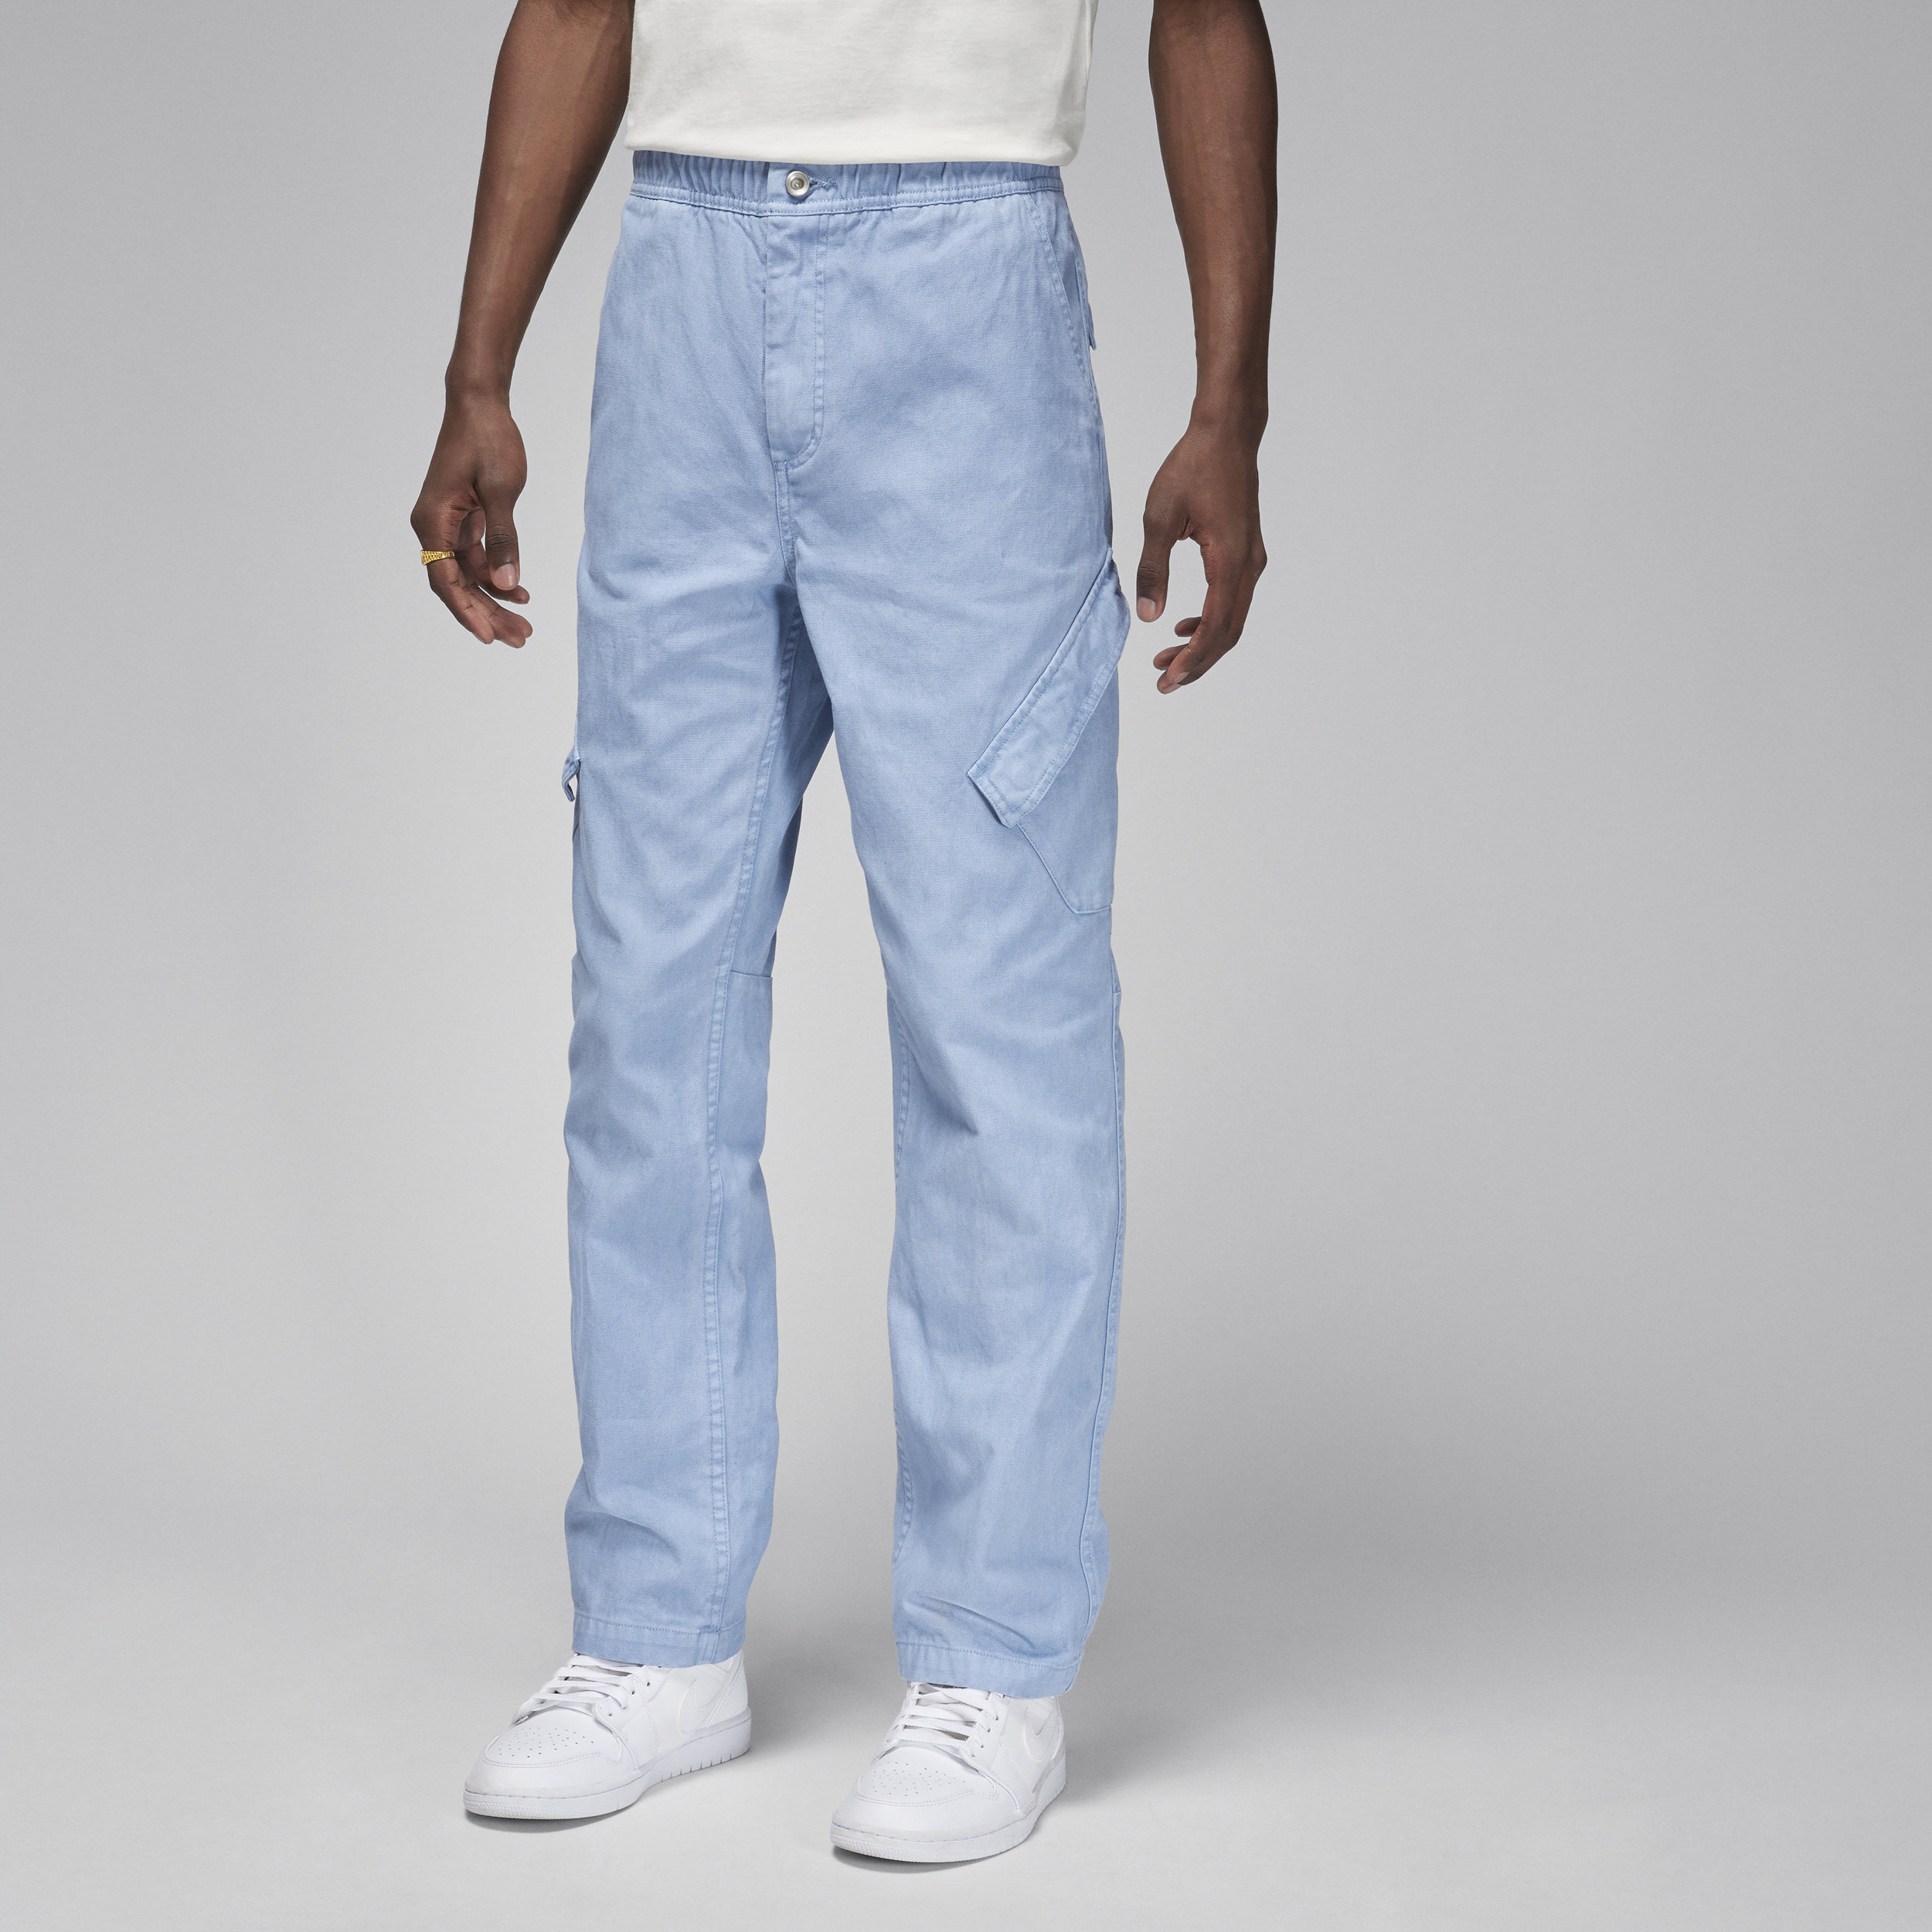 Nike Pantaloni délavé Chicago Jordan Essentials – Uomo - Blu